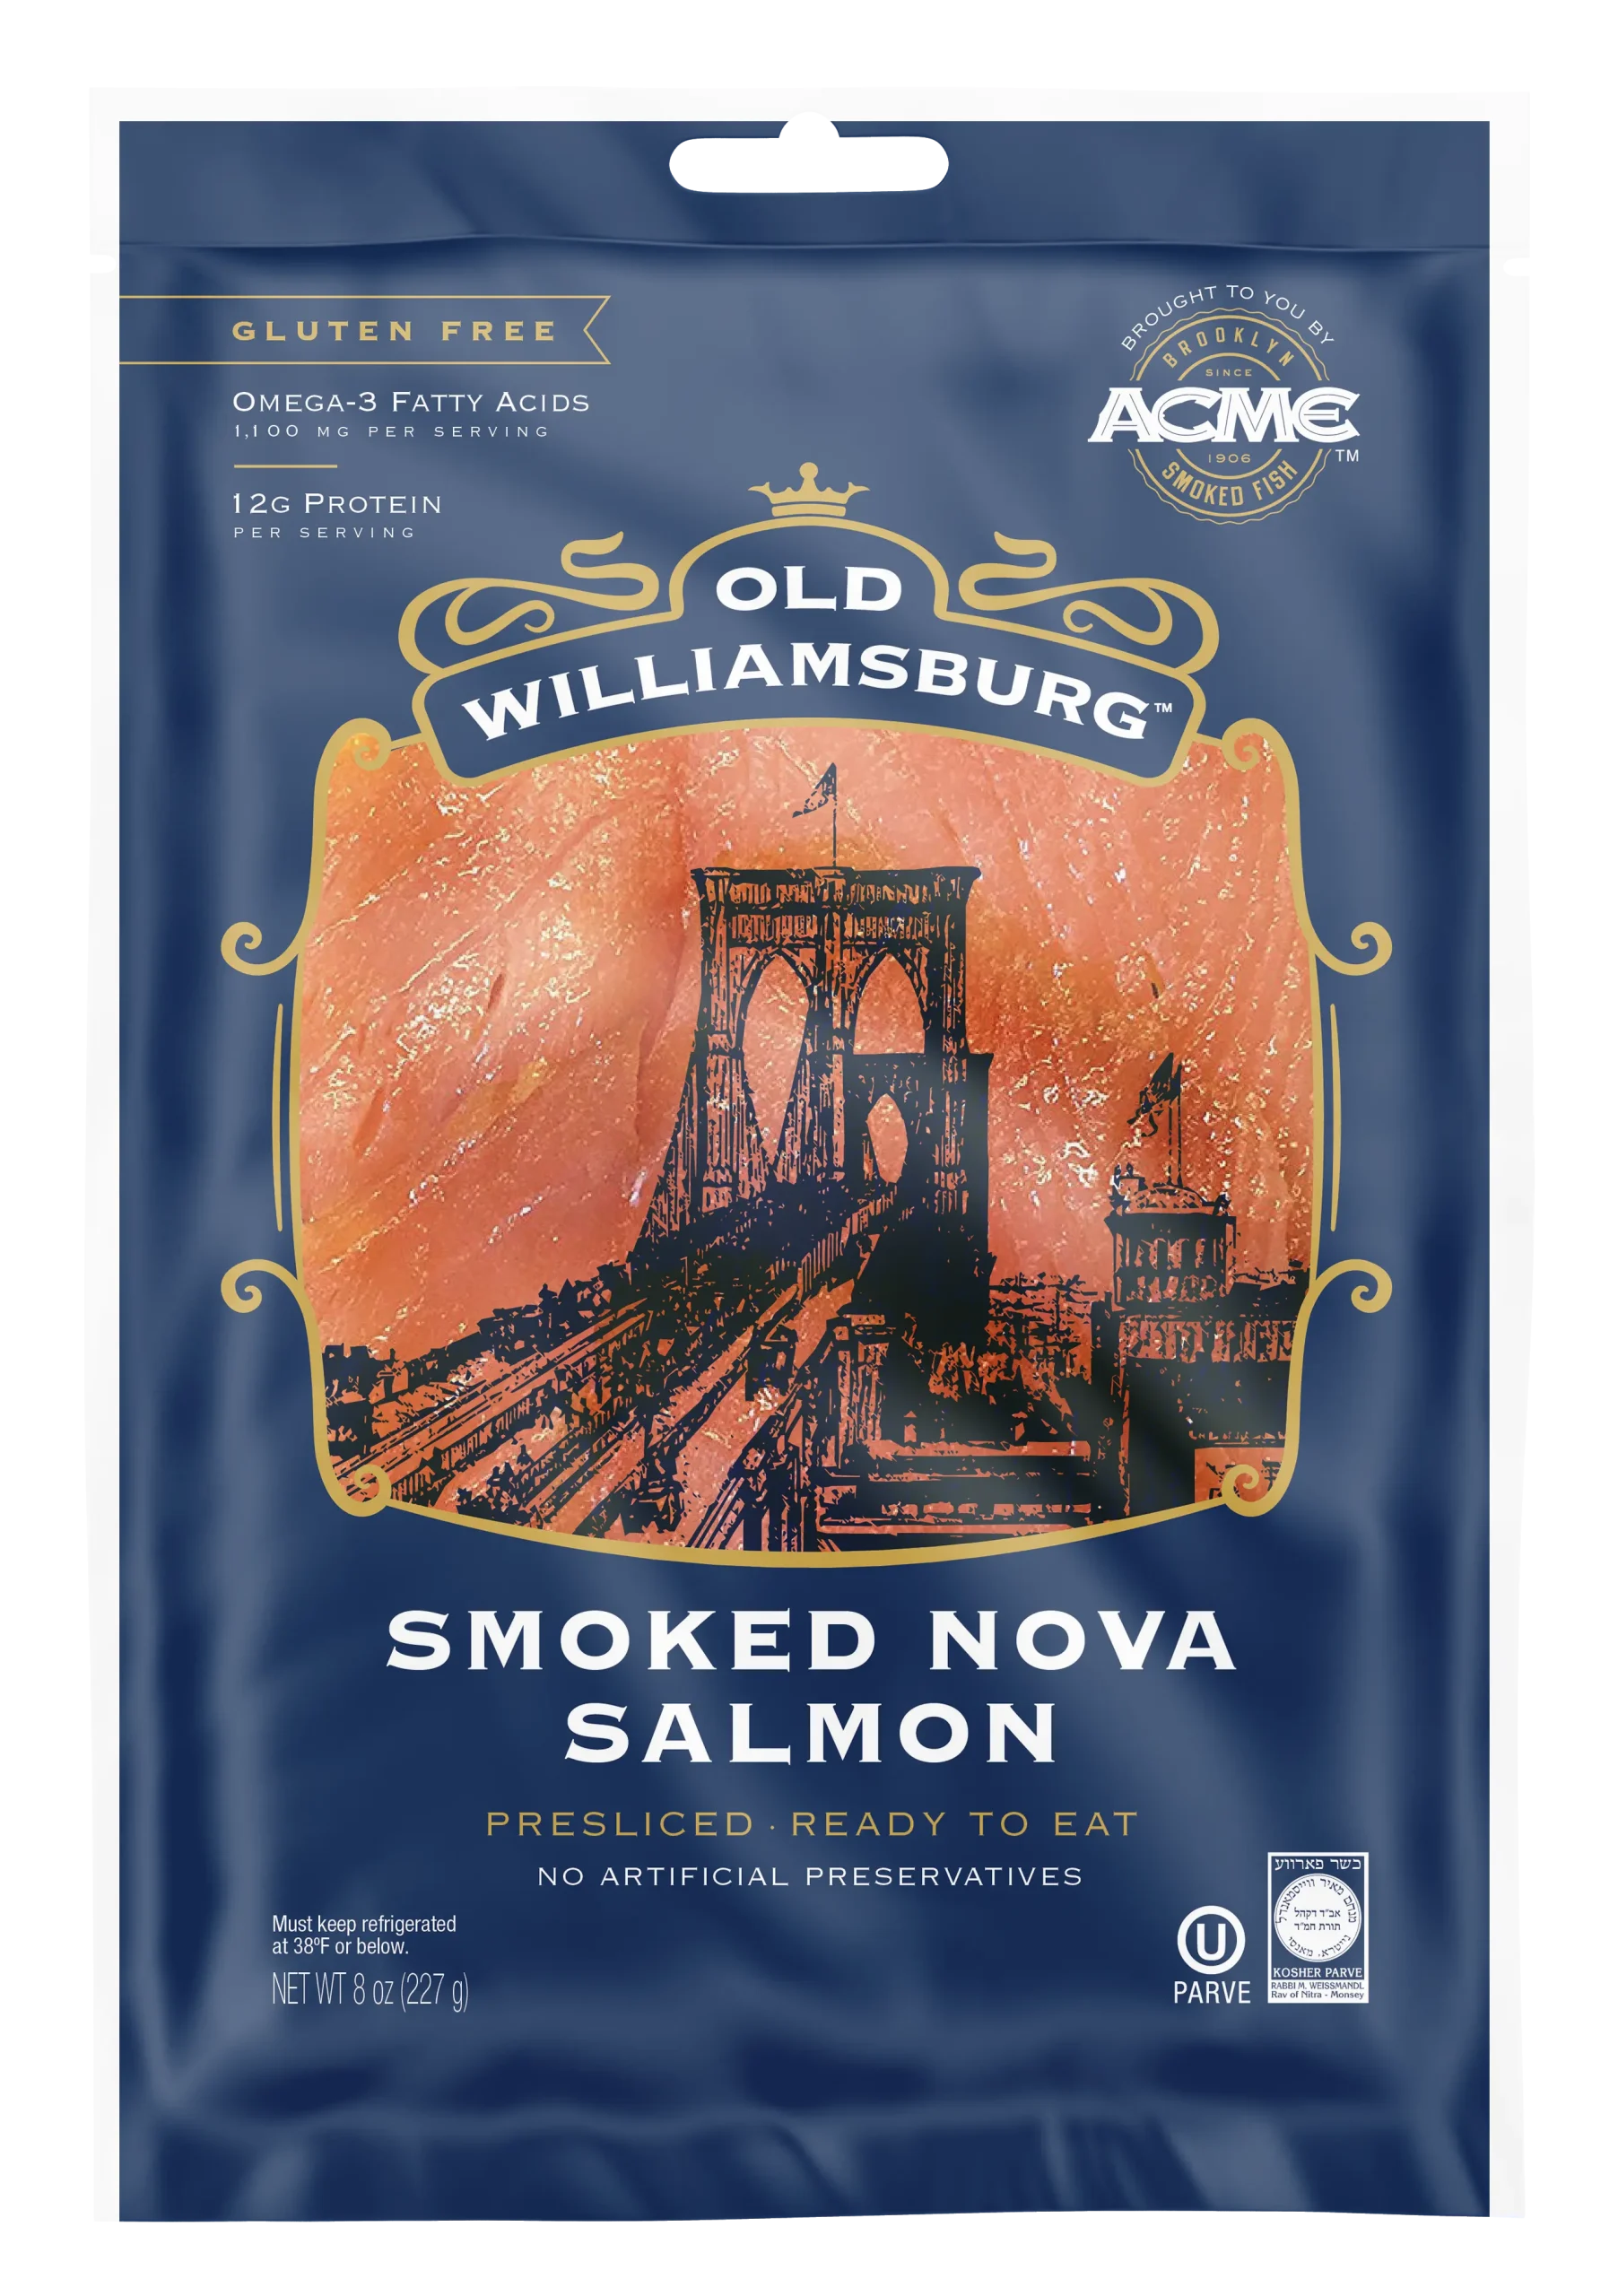 is smoked salmon kosher for passover - Is all smoked salmon kosher